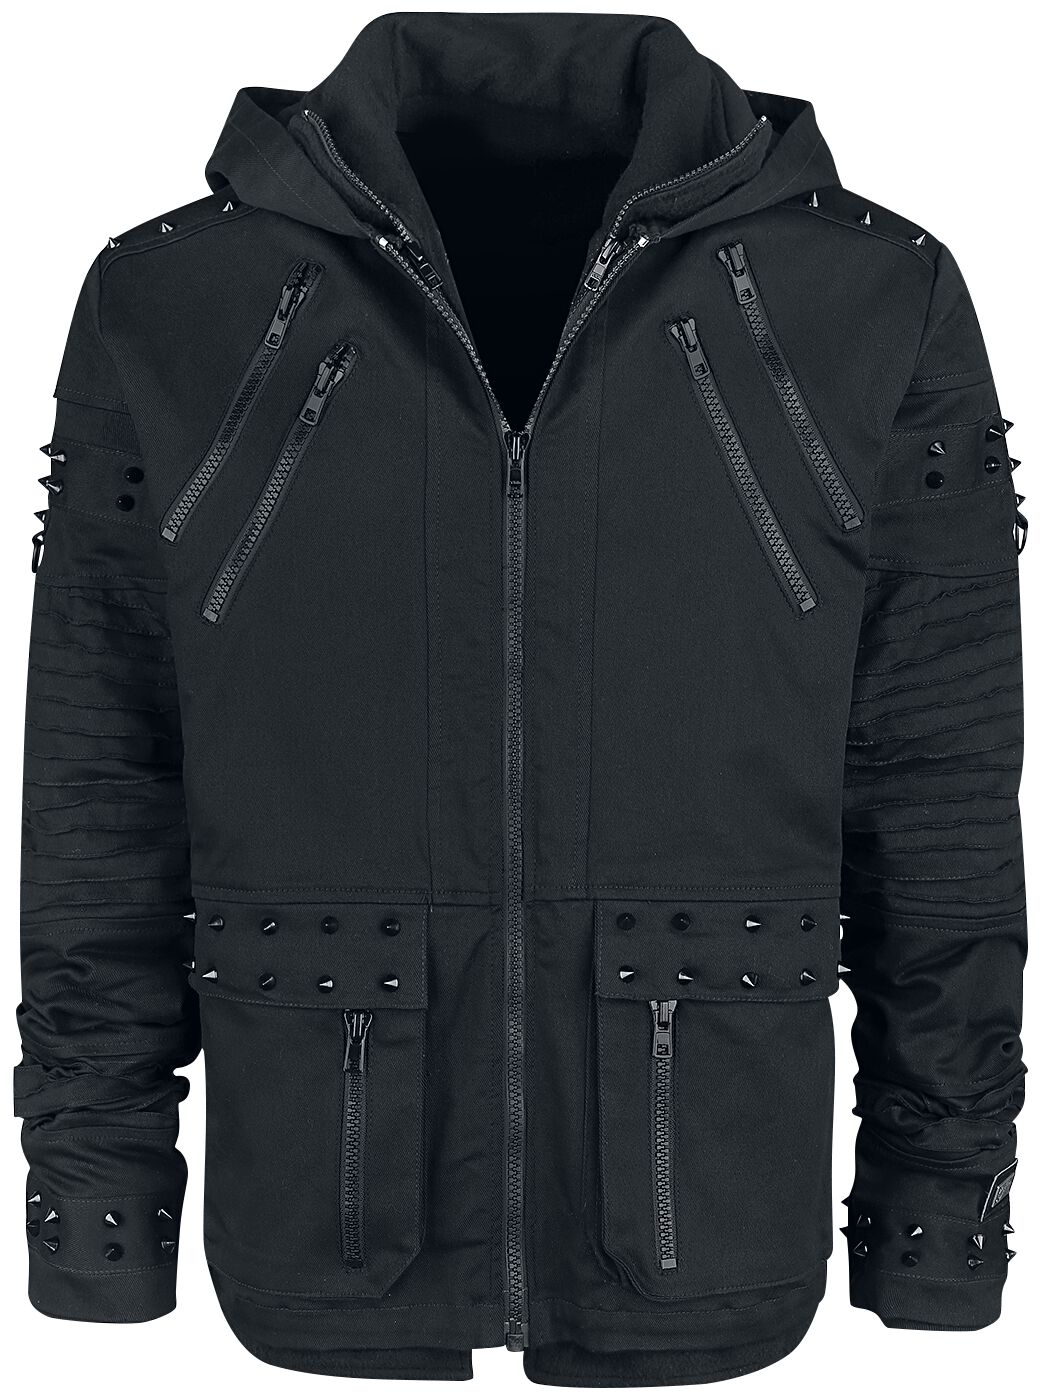 Vixxsin Black Chrome Jacket Winterjacke schwarz in XL